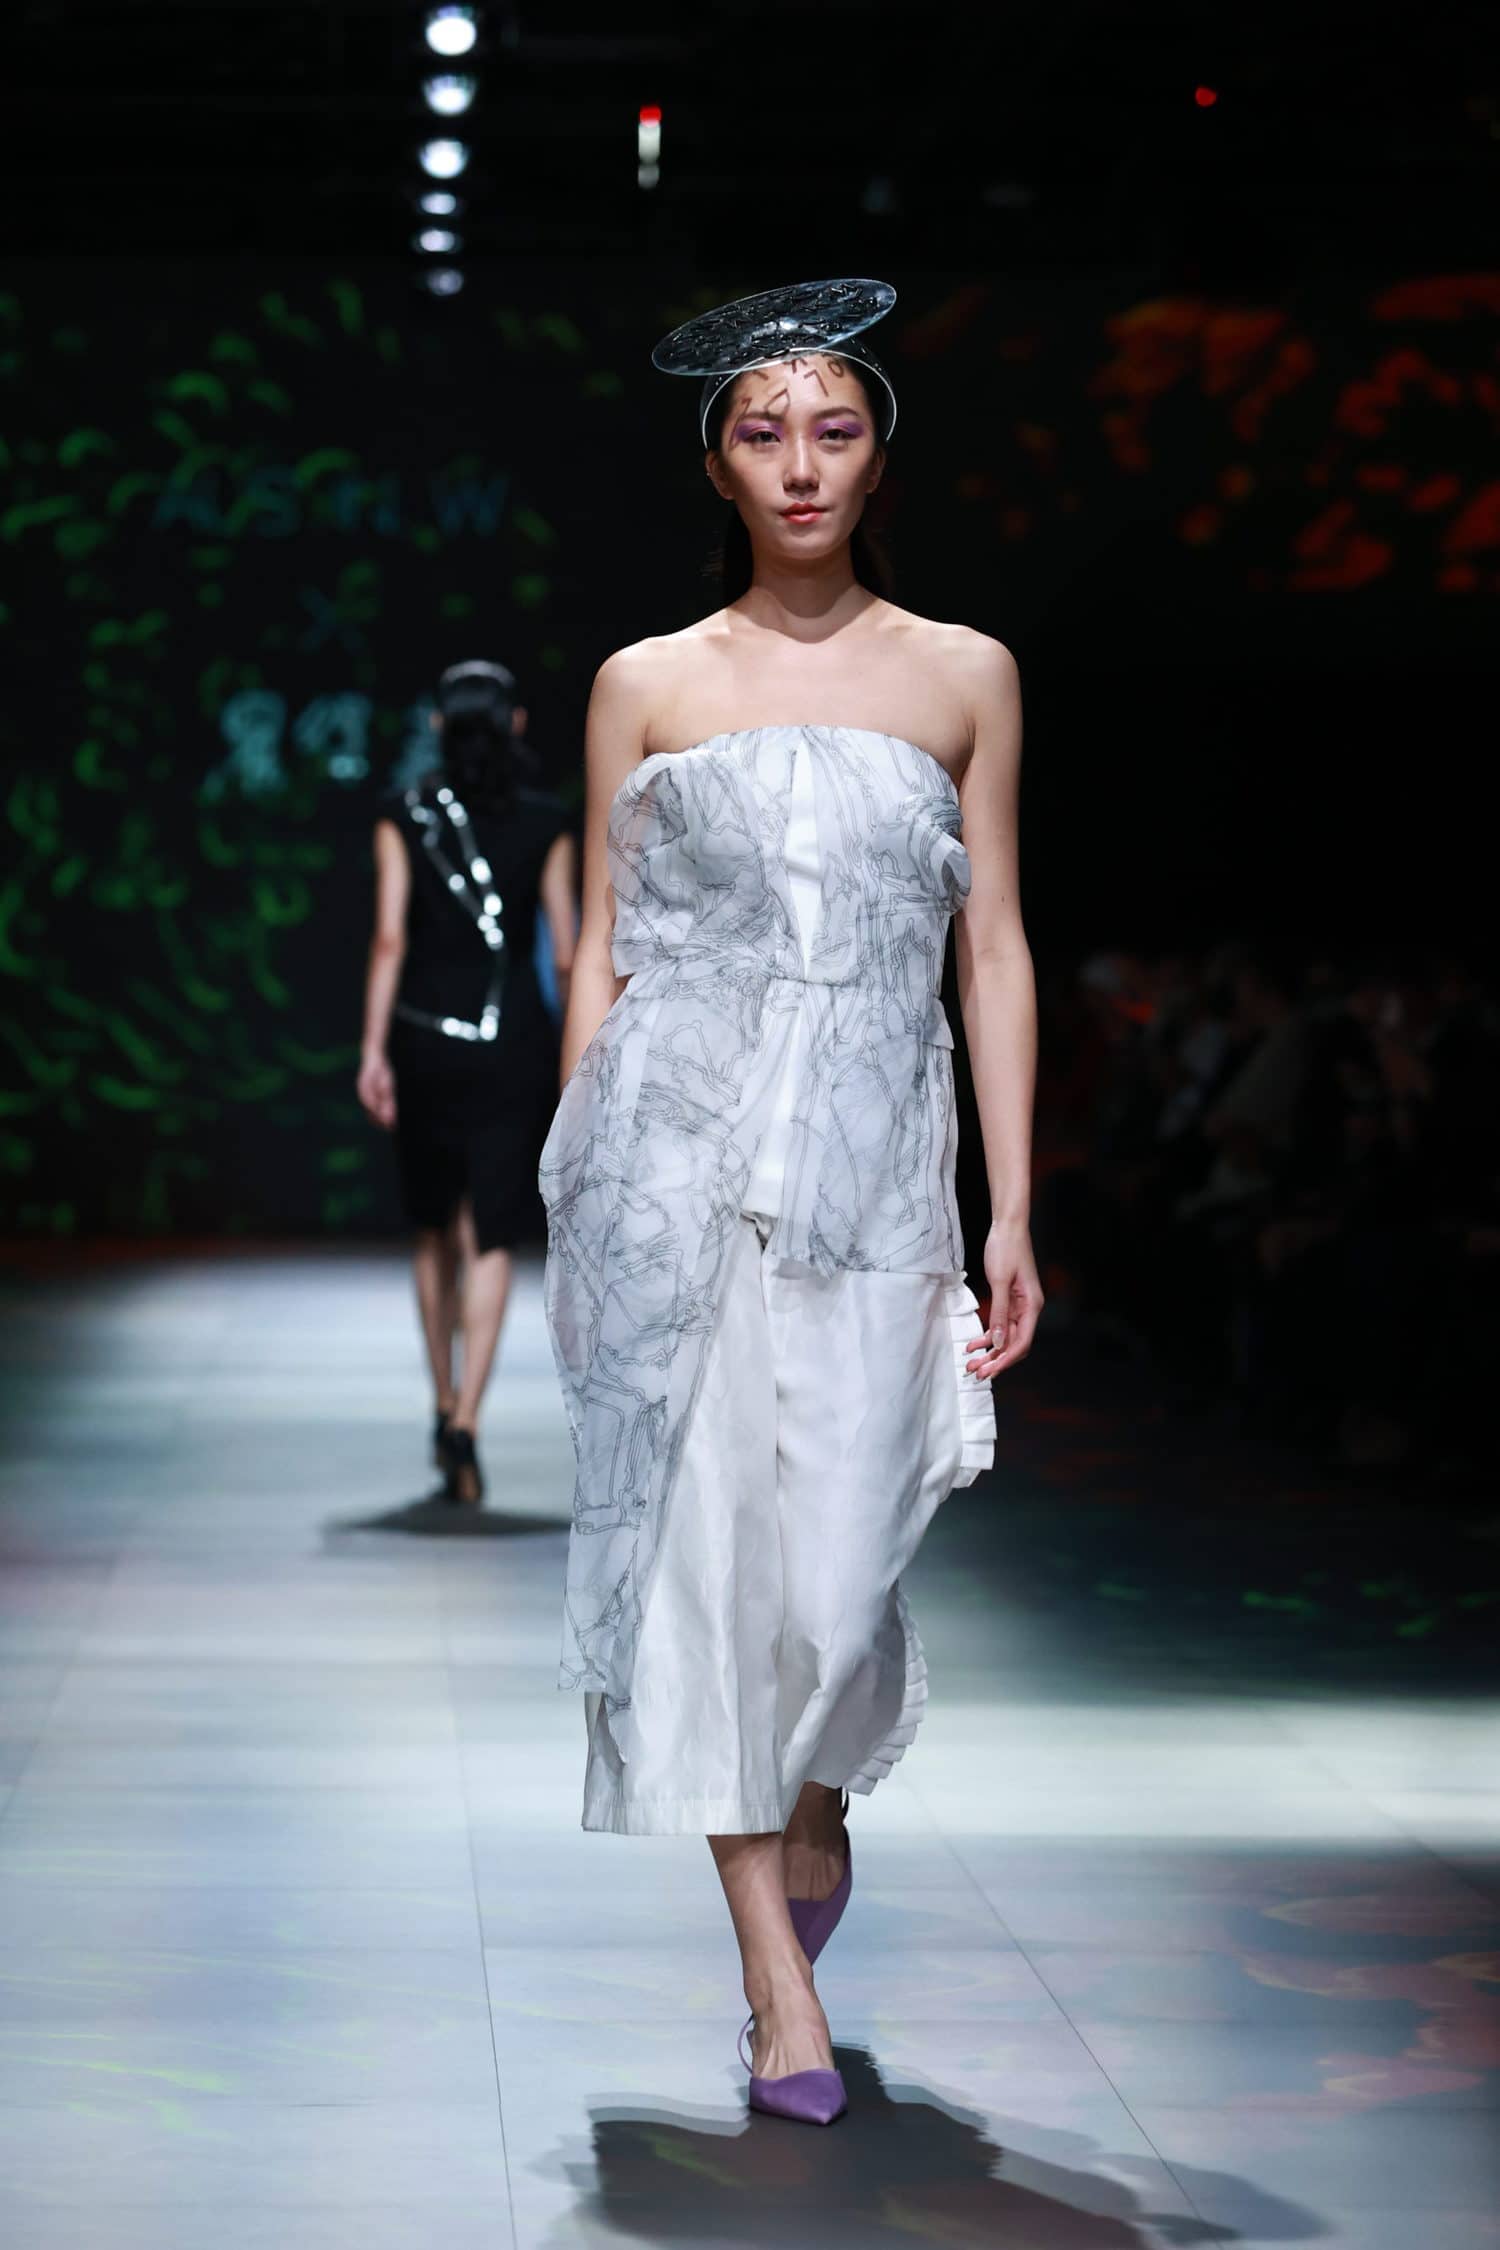 Taipei Fashion Week 臺北時裝週 on X: See the premium function